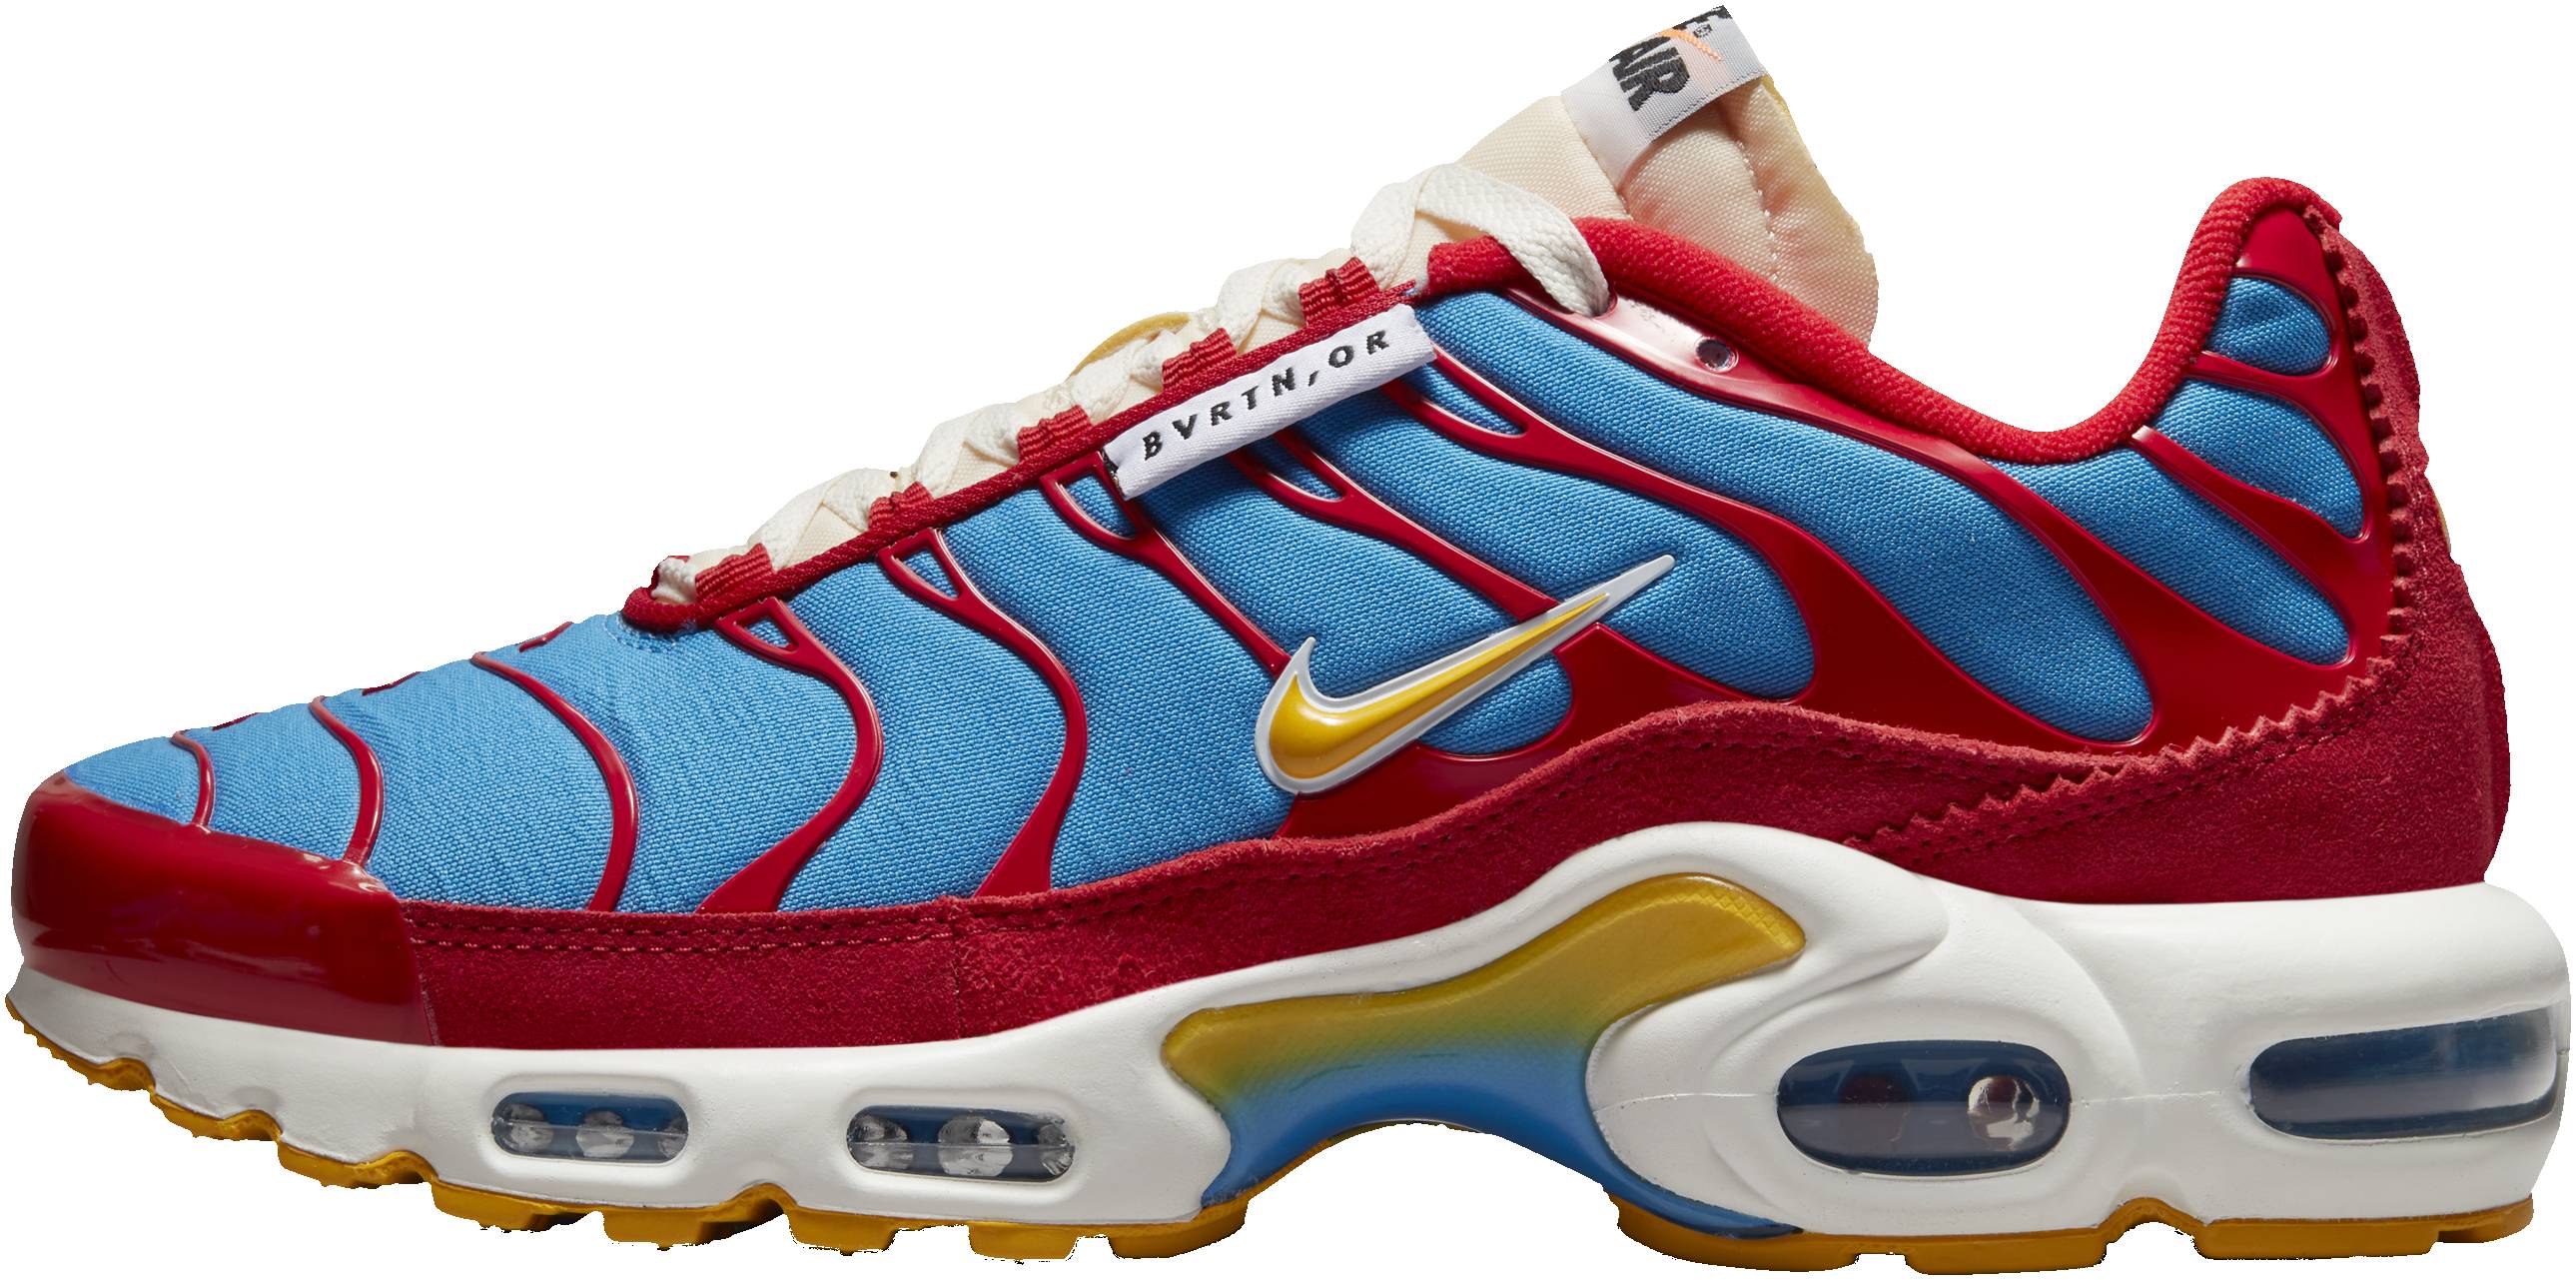 Postman winner Resignation Nike Air Max Plus TN SE sneakers in 10 colors (only $113) | RunRepeat